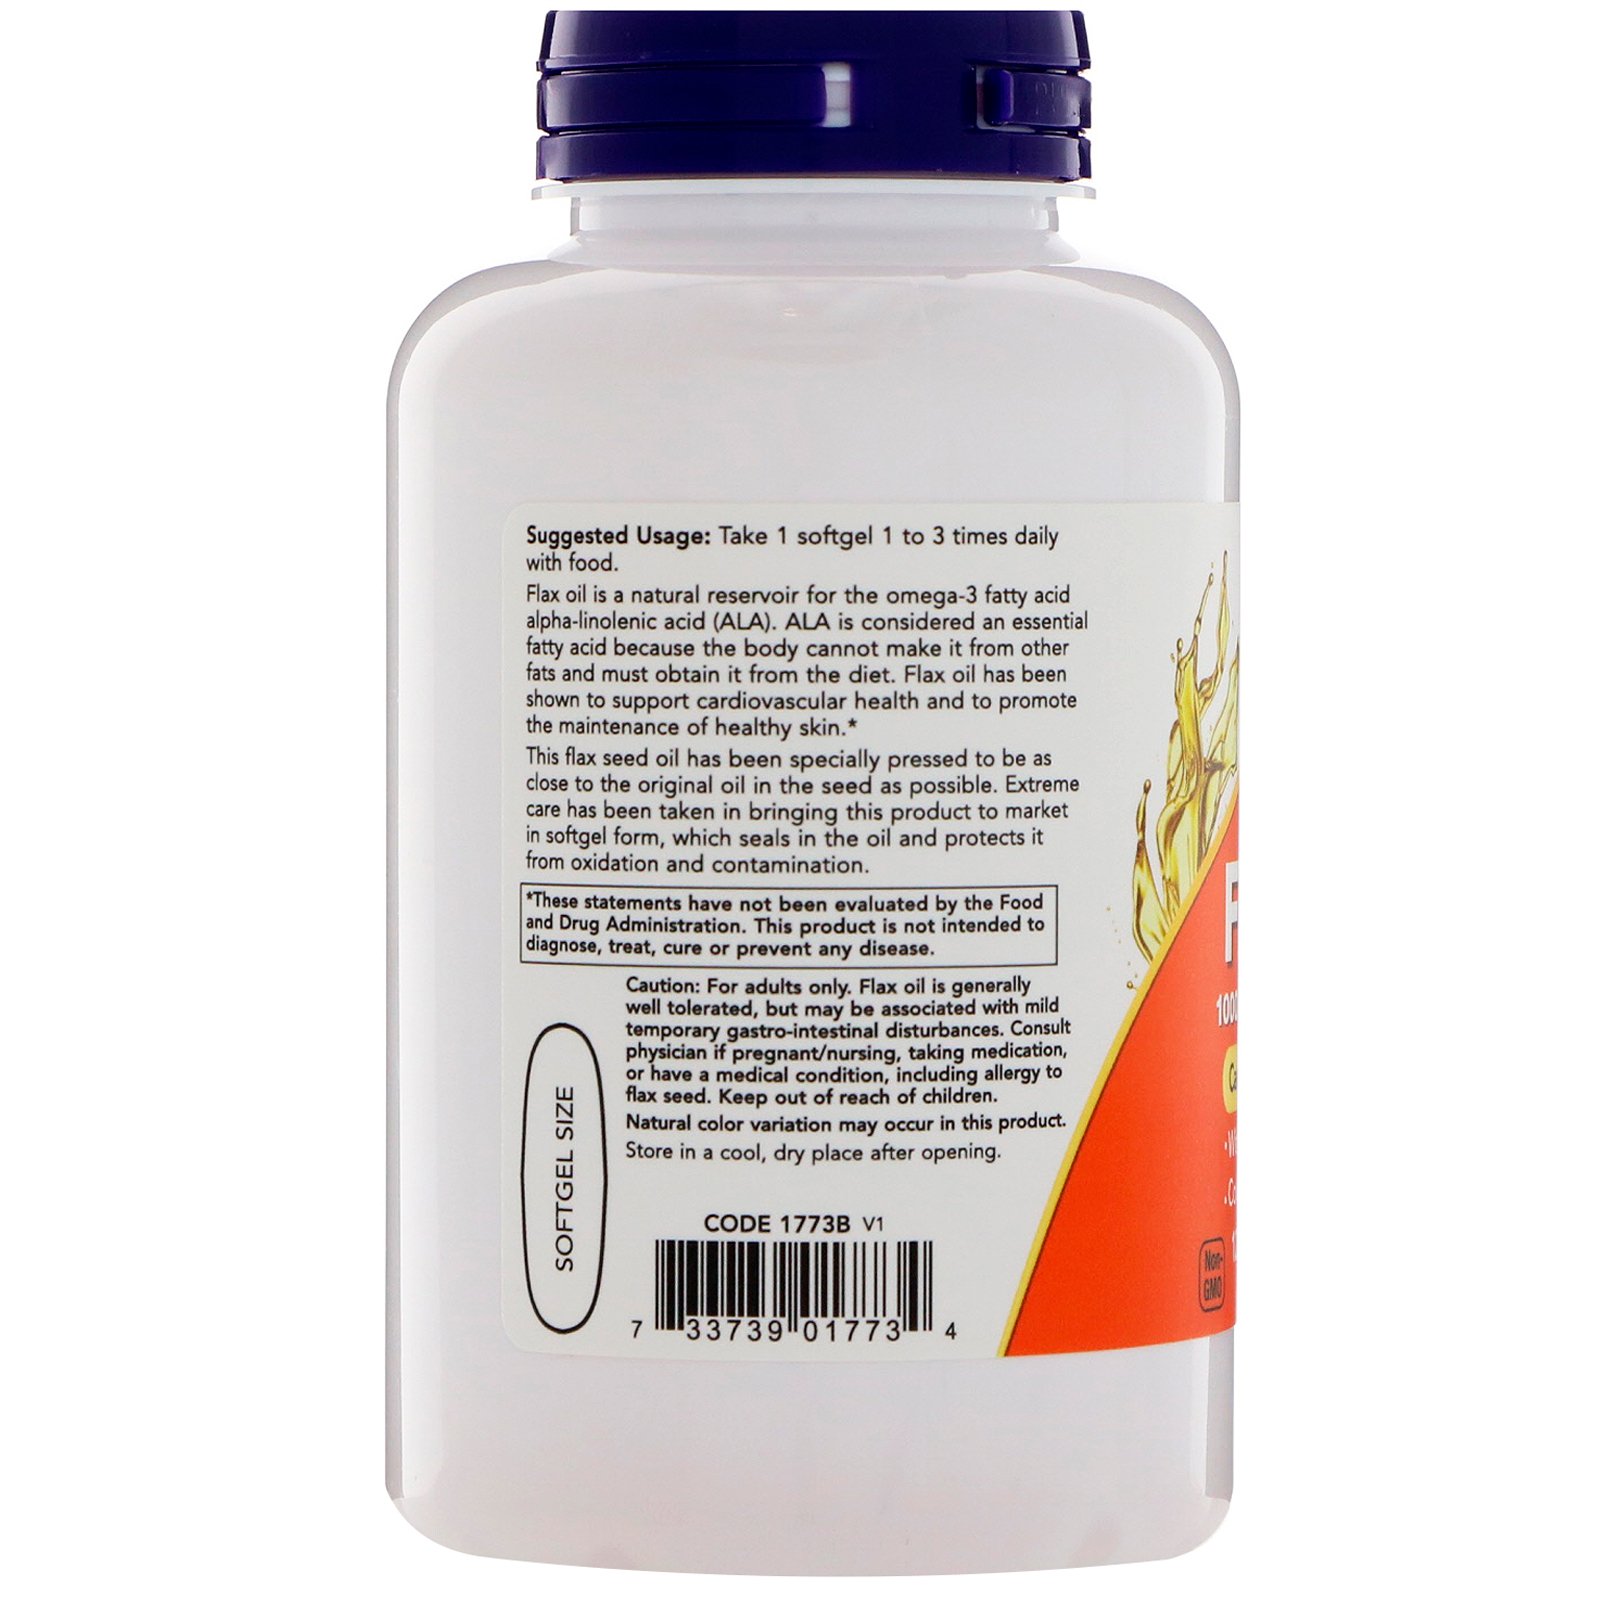 NOW Flax Oil, Льняное Масло 1000 мг - 120 вегетарианских капсул